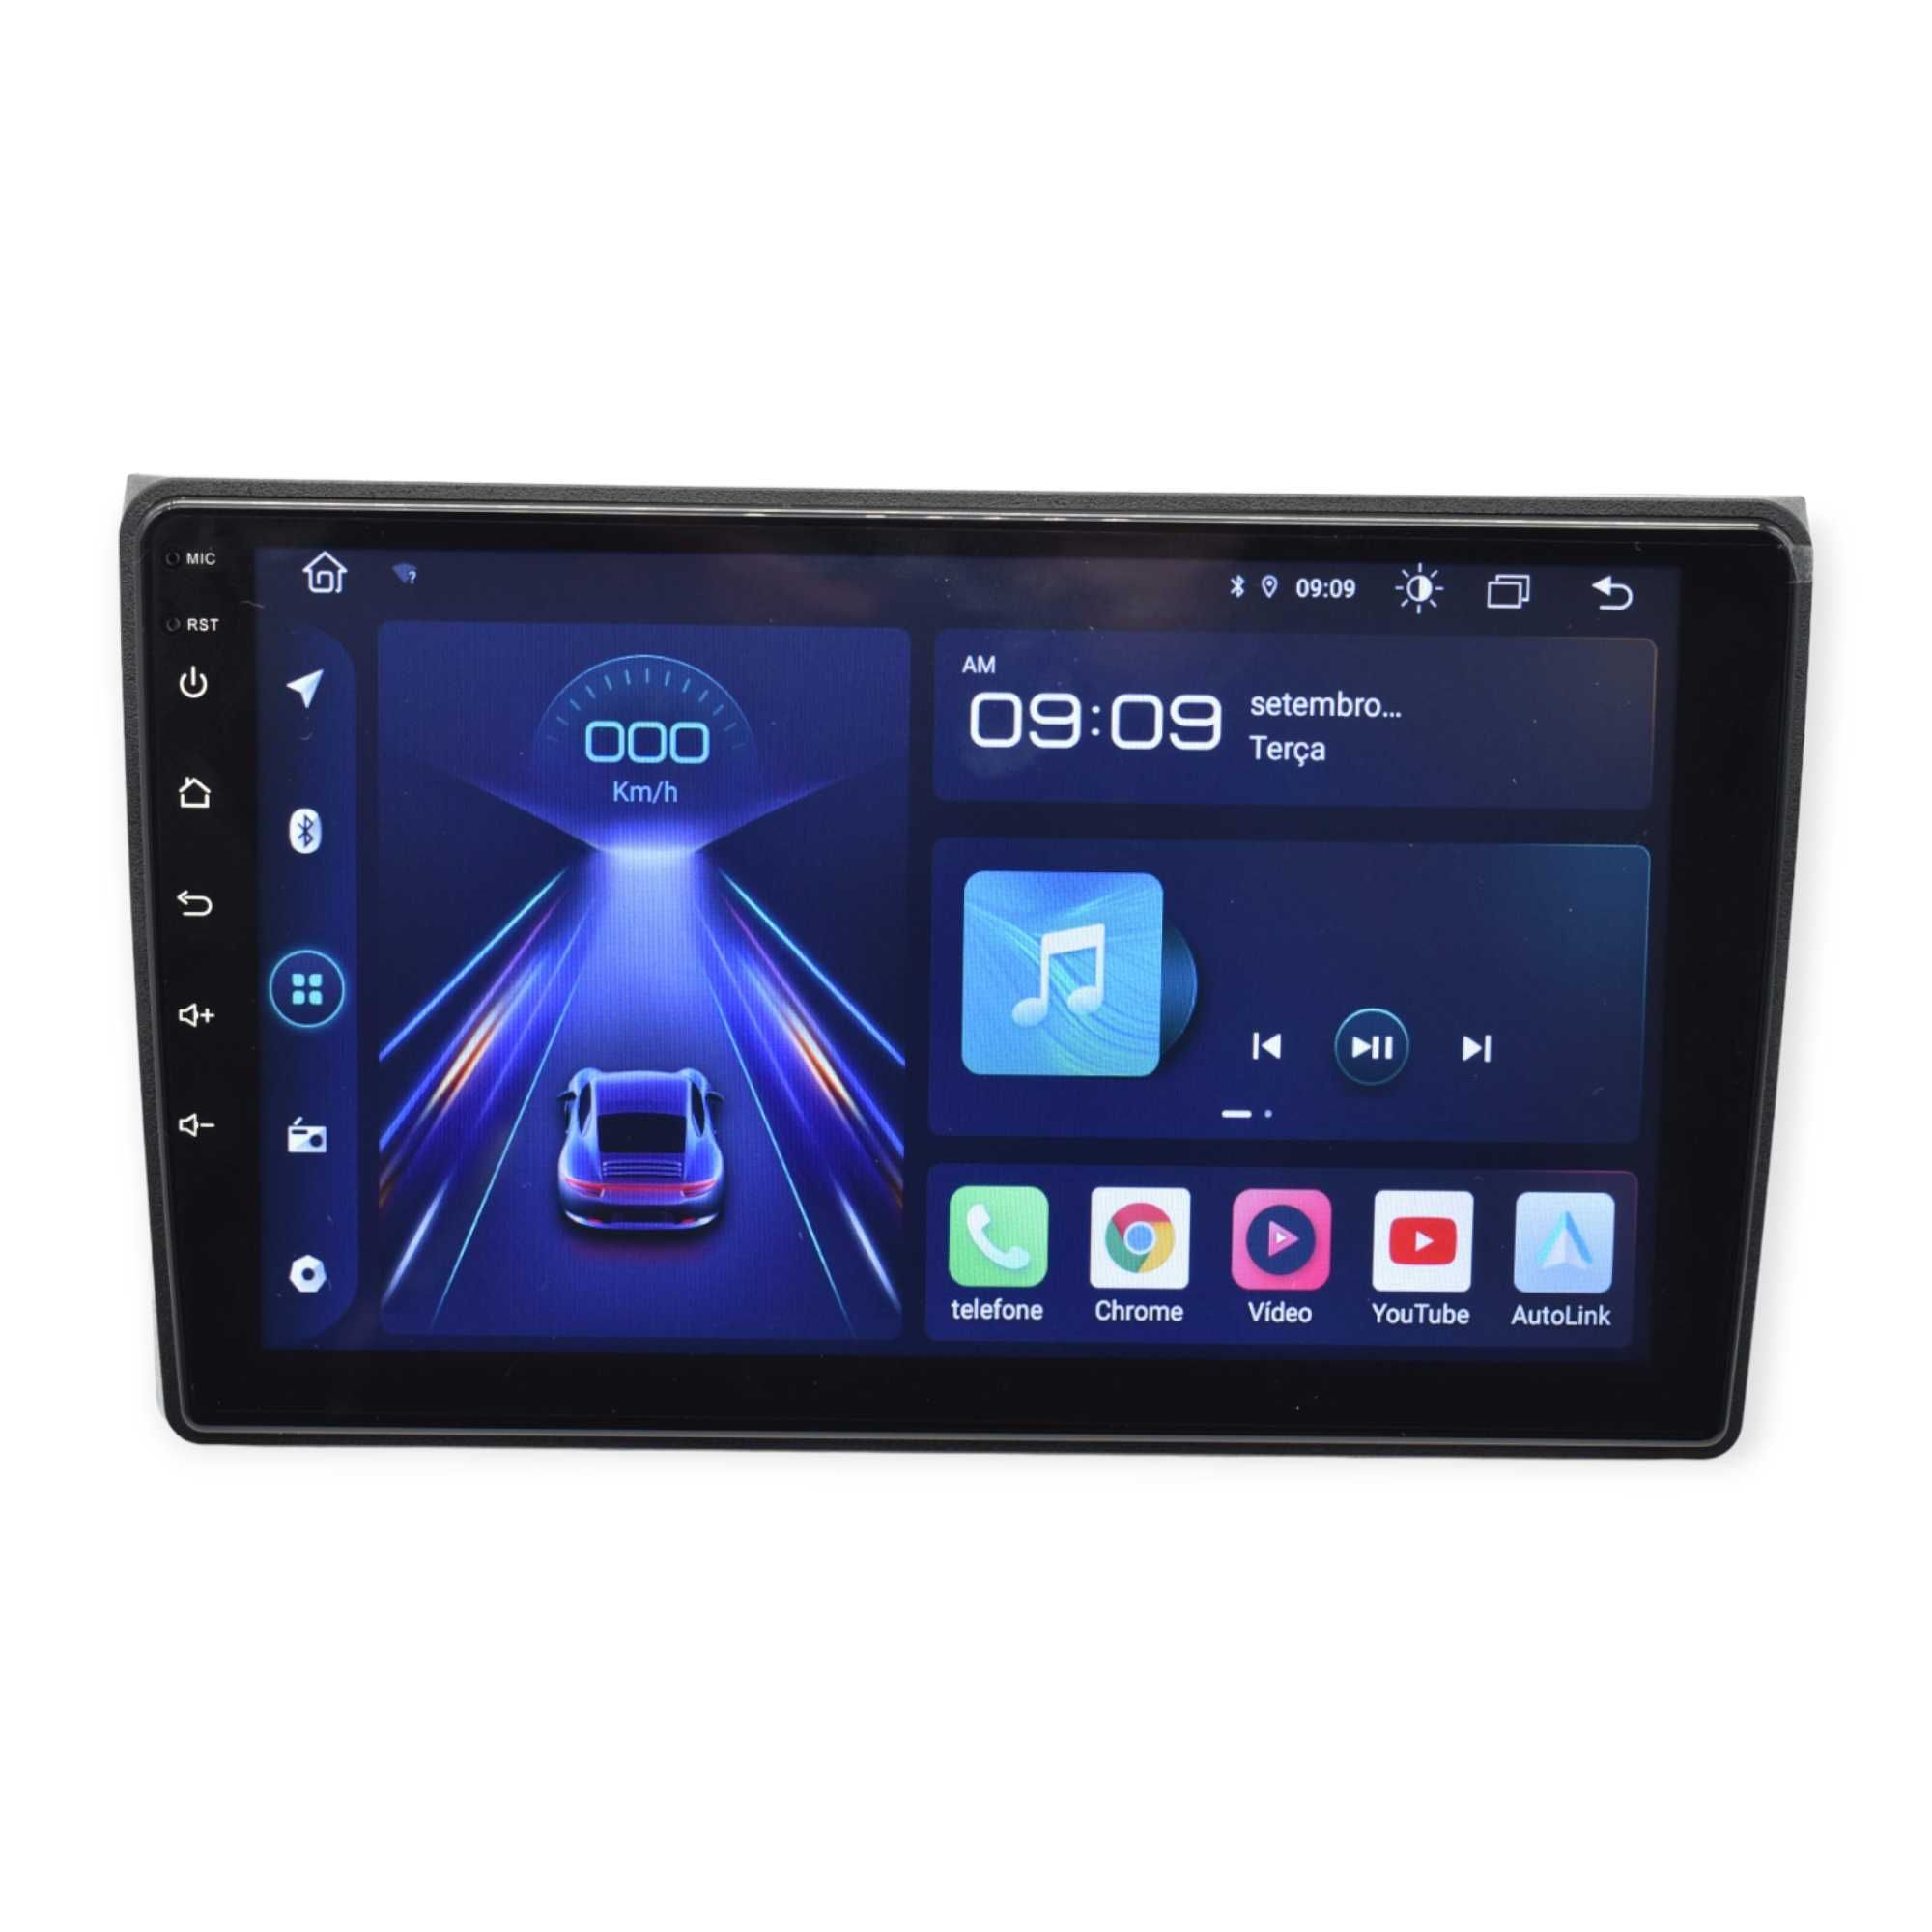 Rádio Audi A4 Auto Rádio 2 DIN Android • Wifi GPS BLUETOOTH + câmara